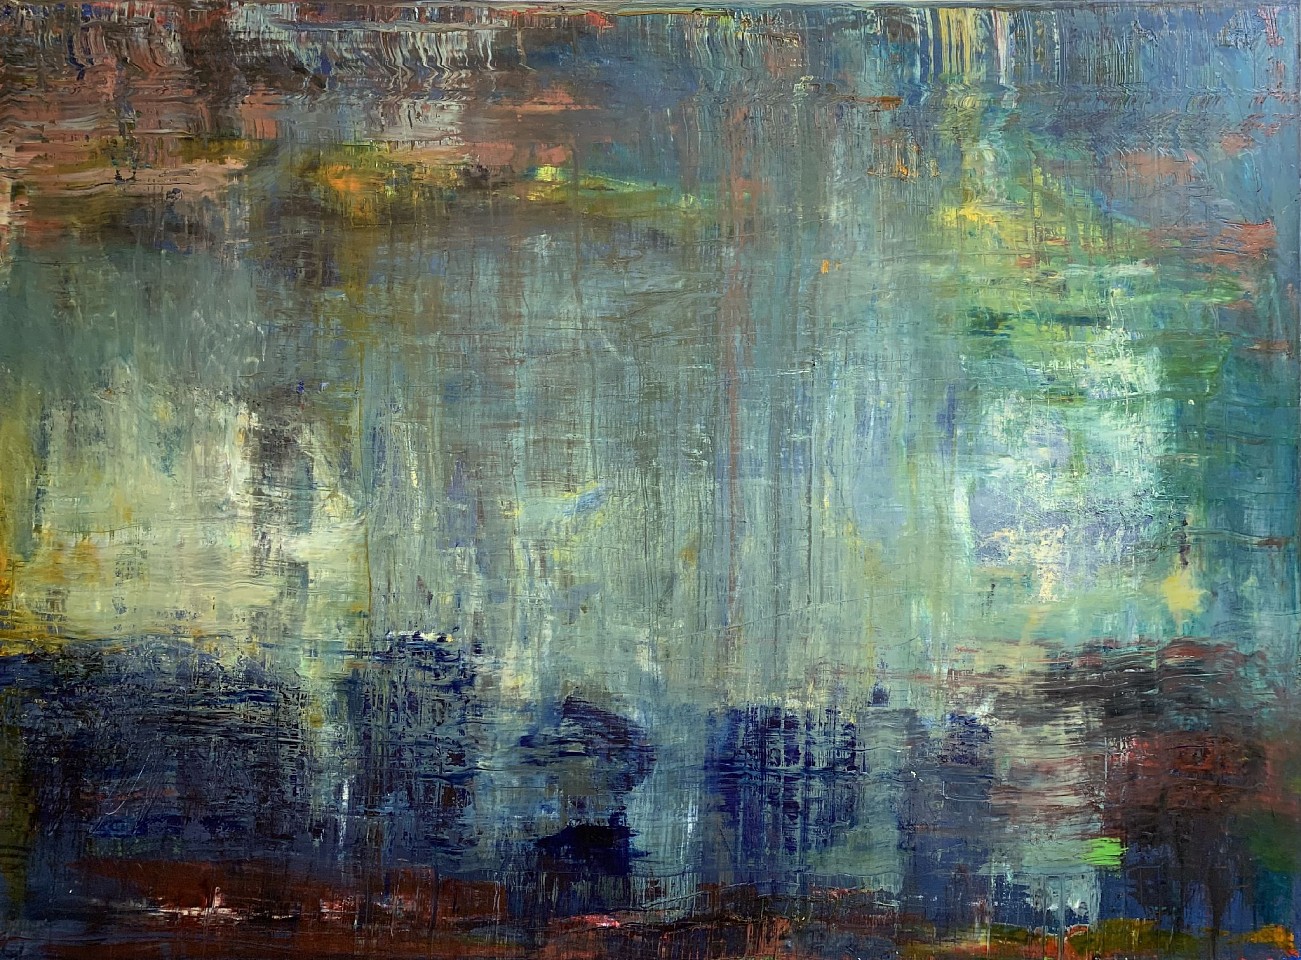 Ira Barkoff, Dawn Light, 2021
oil on canvas, 36 x 48 in. (91.4 x 121.9 cm)
IB210503